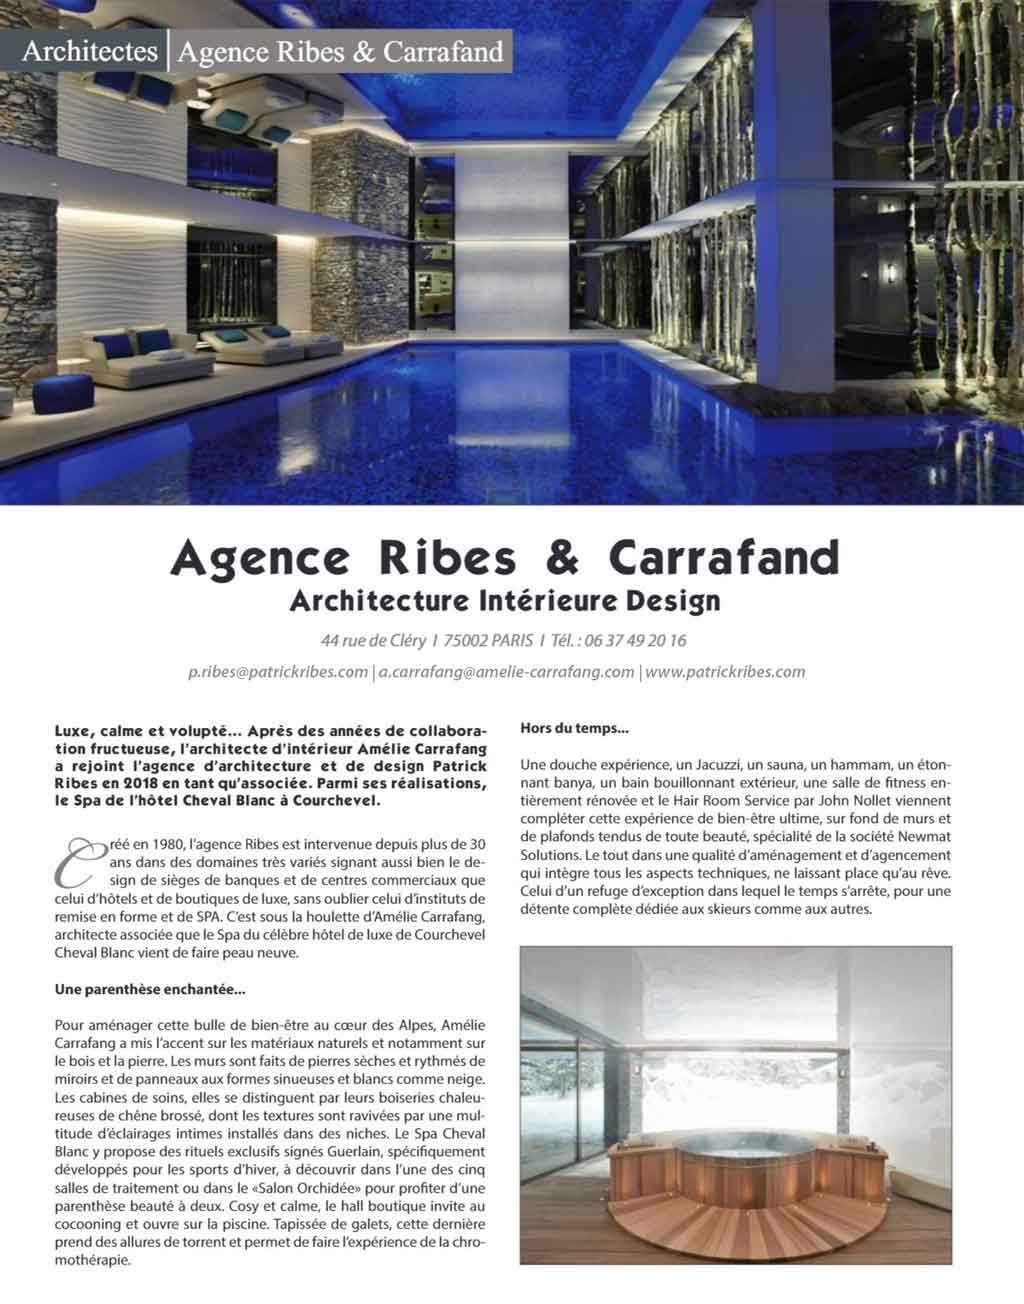 Agence Ribes & Carrafand